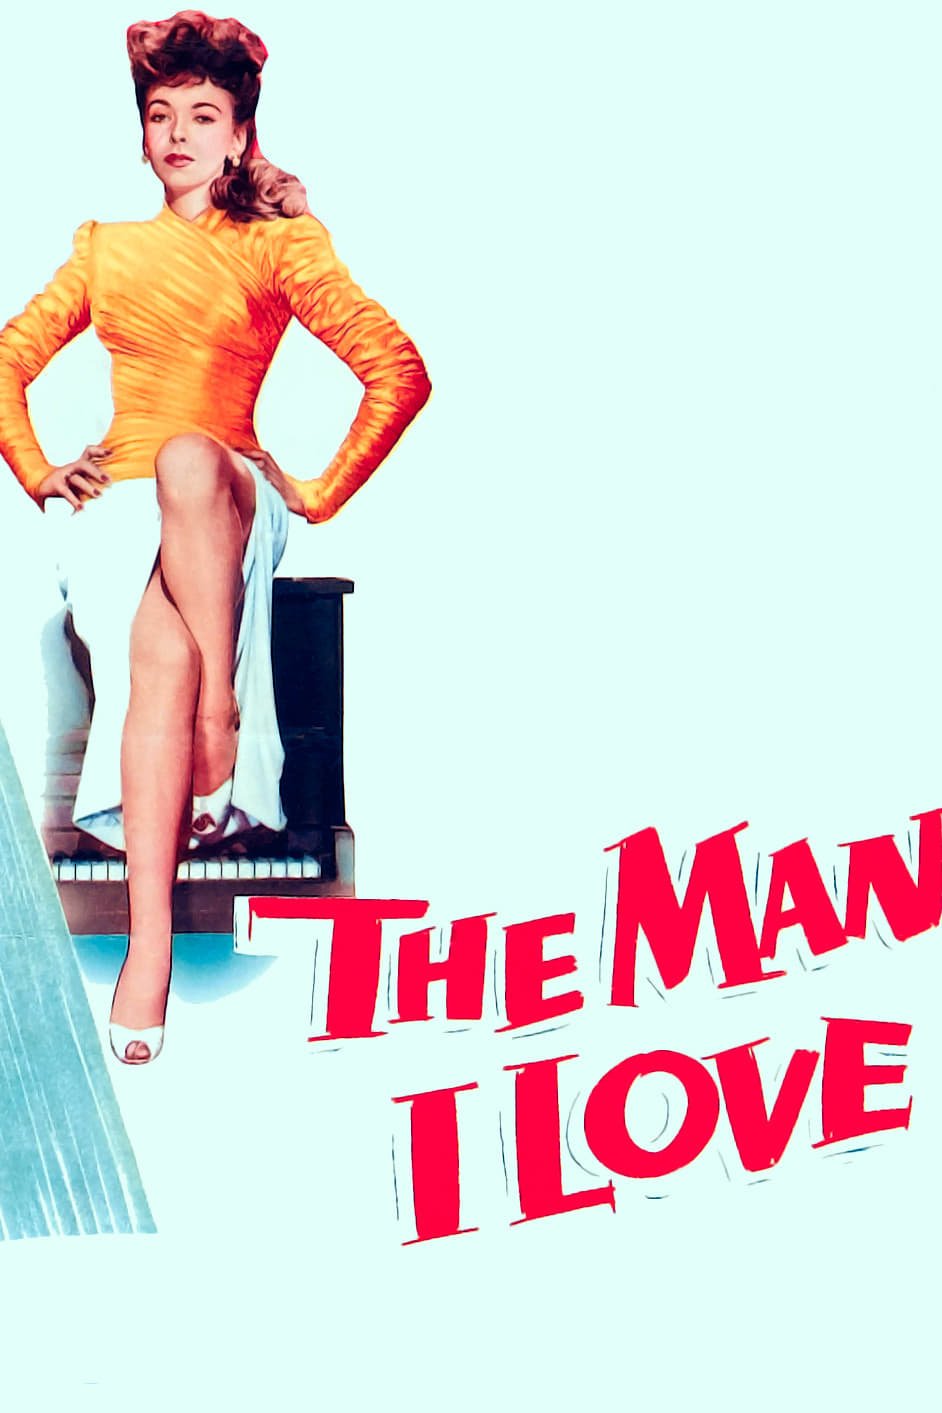 The Man I Love (1946)